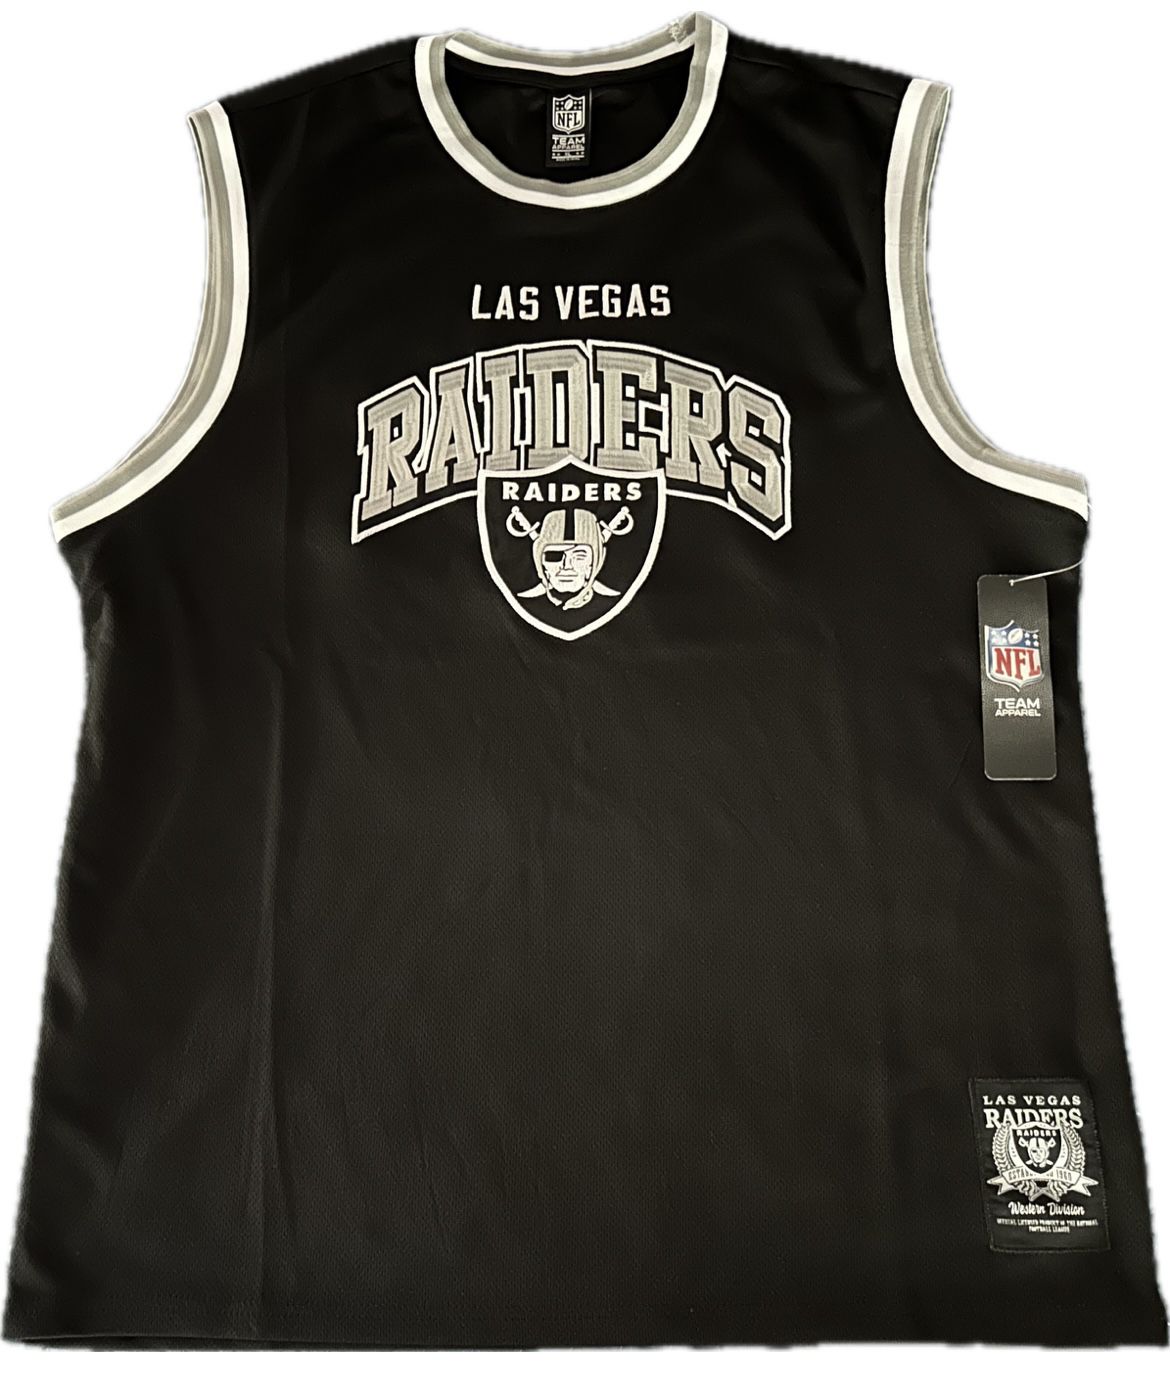 Las Vegas Raiders Embroidered Black Basketball Jersey Men’s Large New